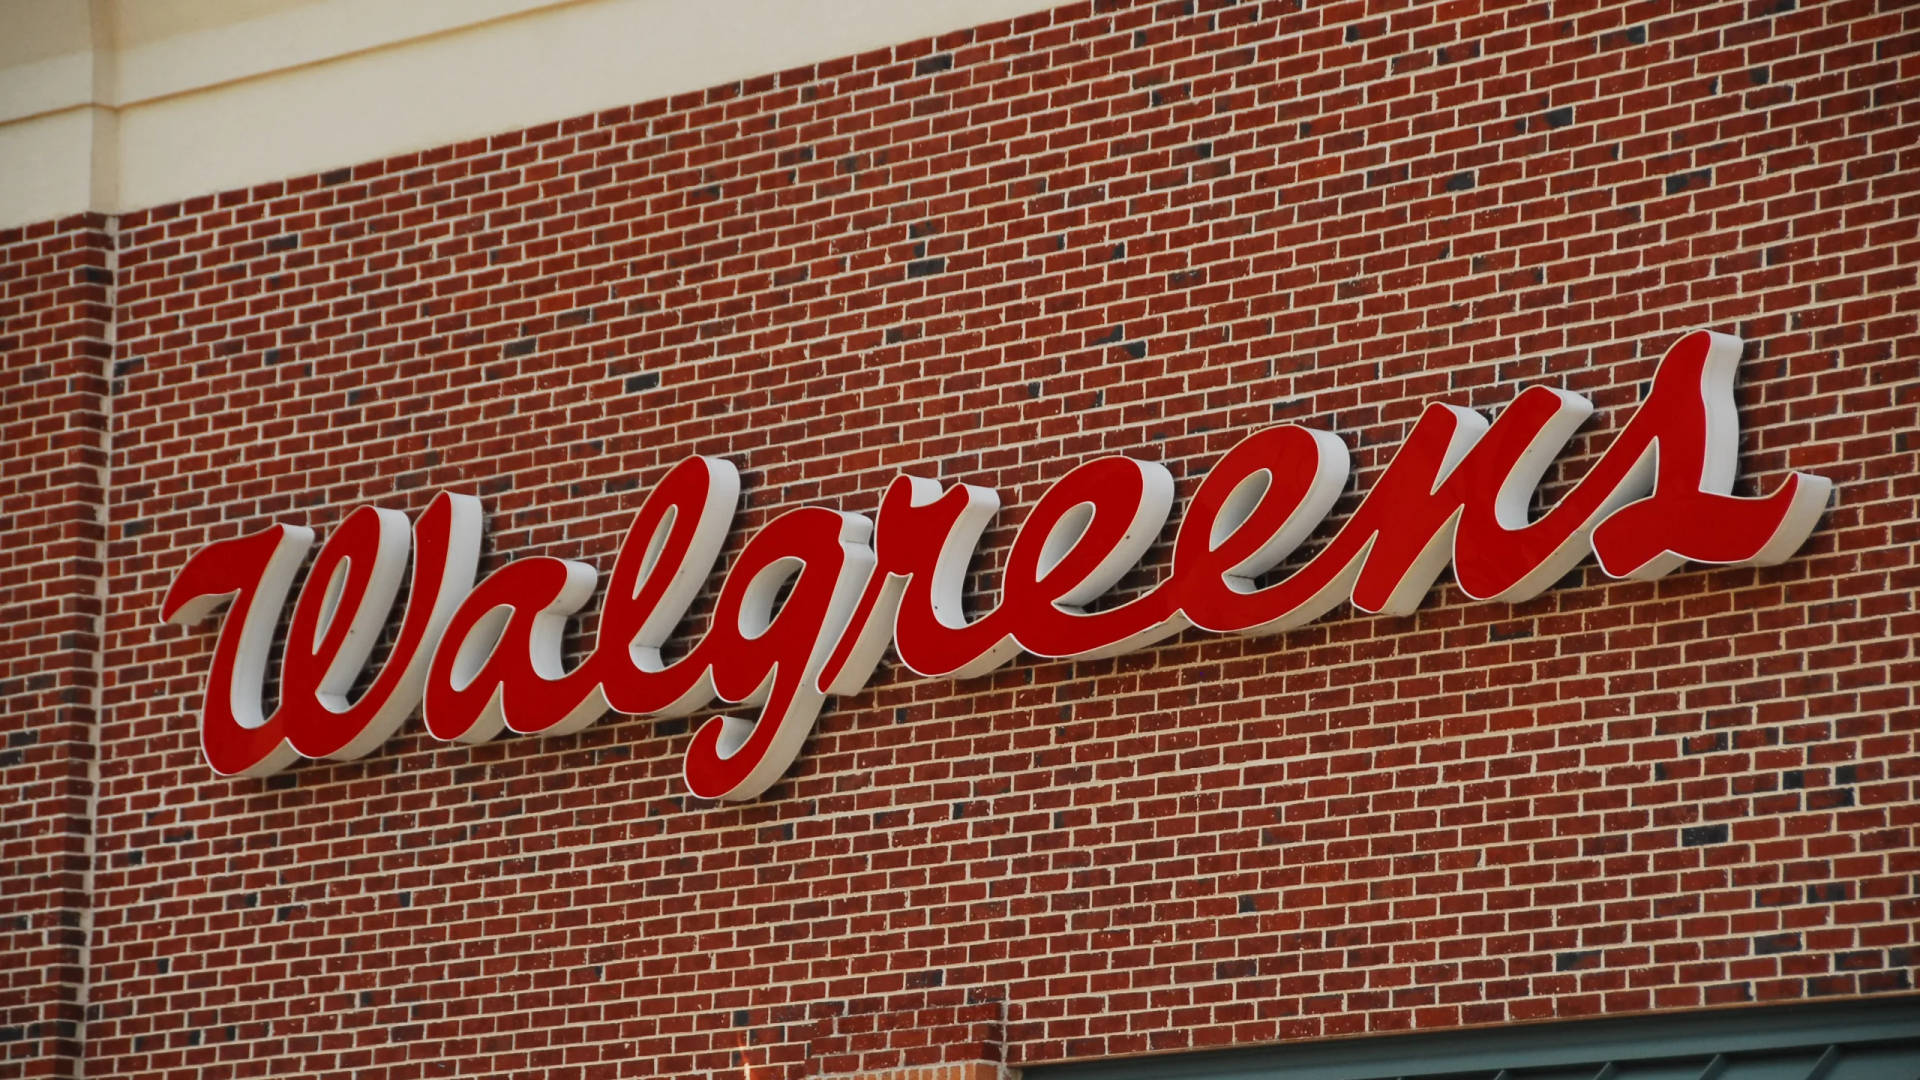 Walgreens Signage Brick Wall Background